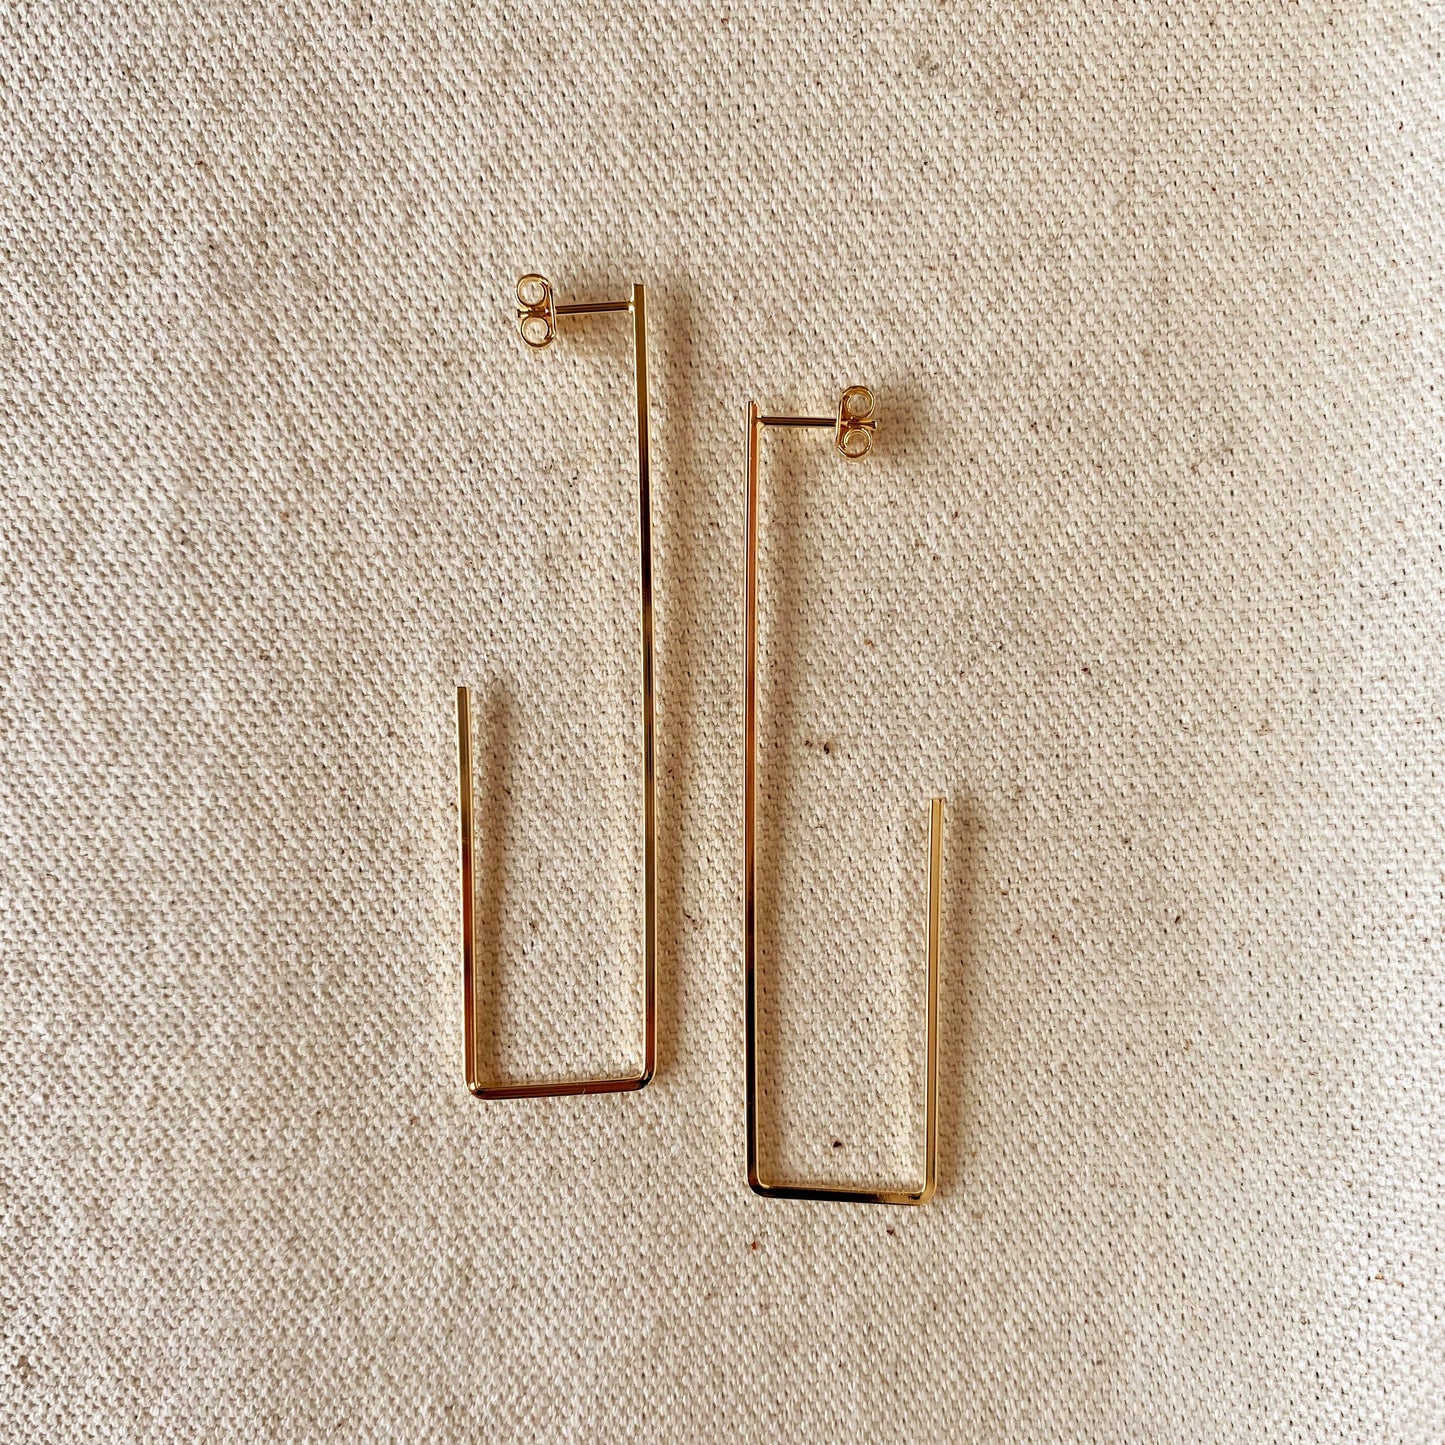 18k Gold Filled Rectangle Shaped Earrings